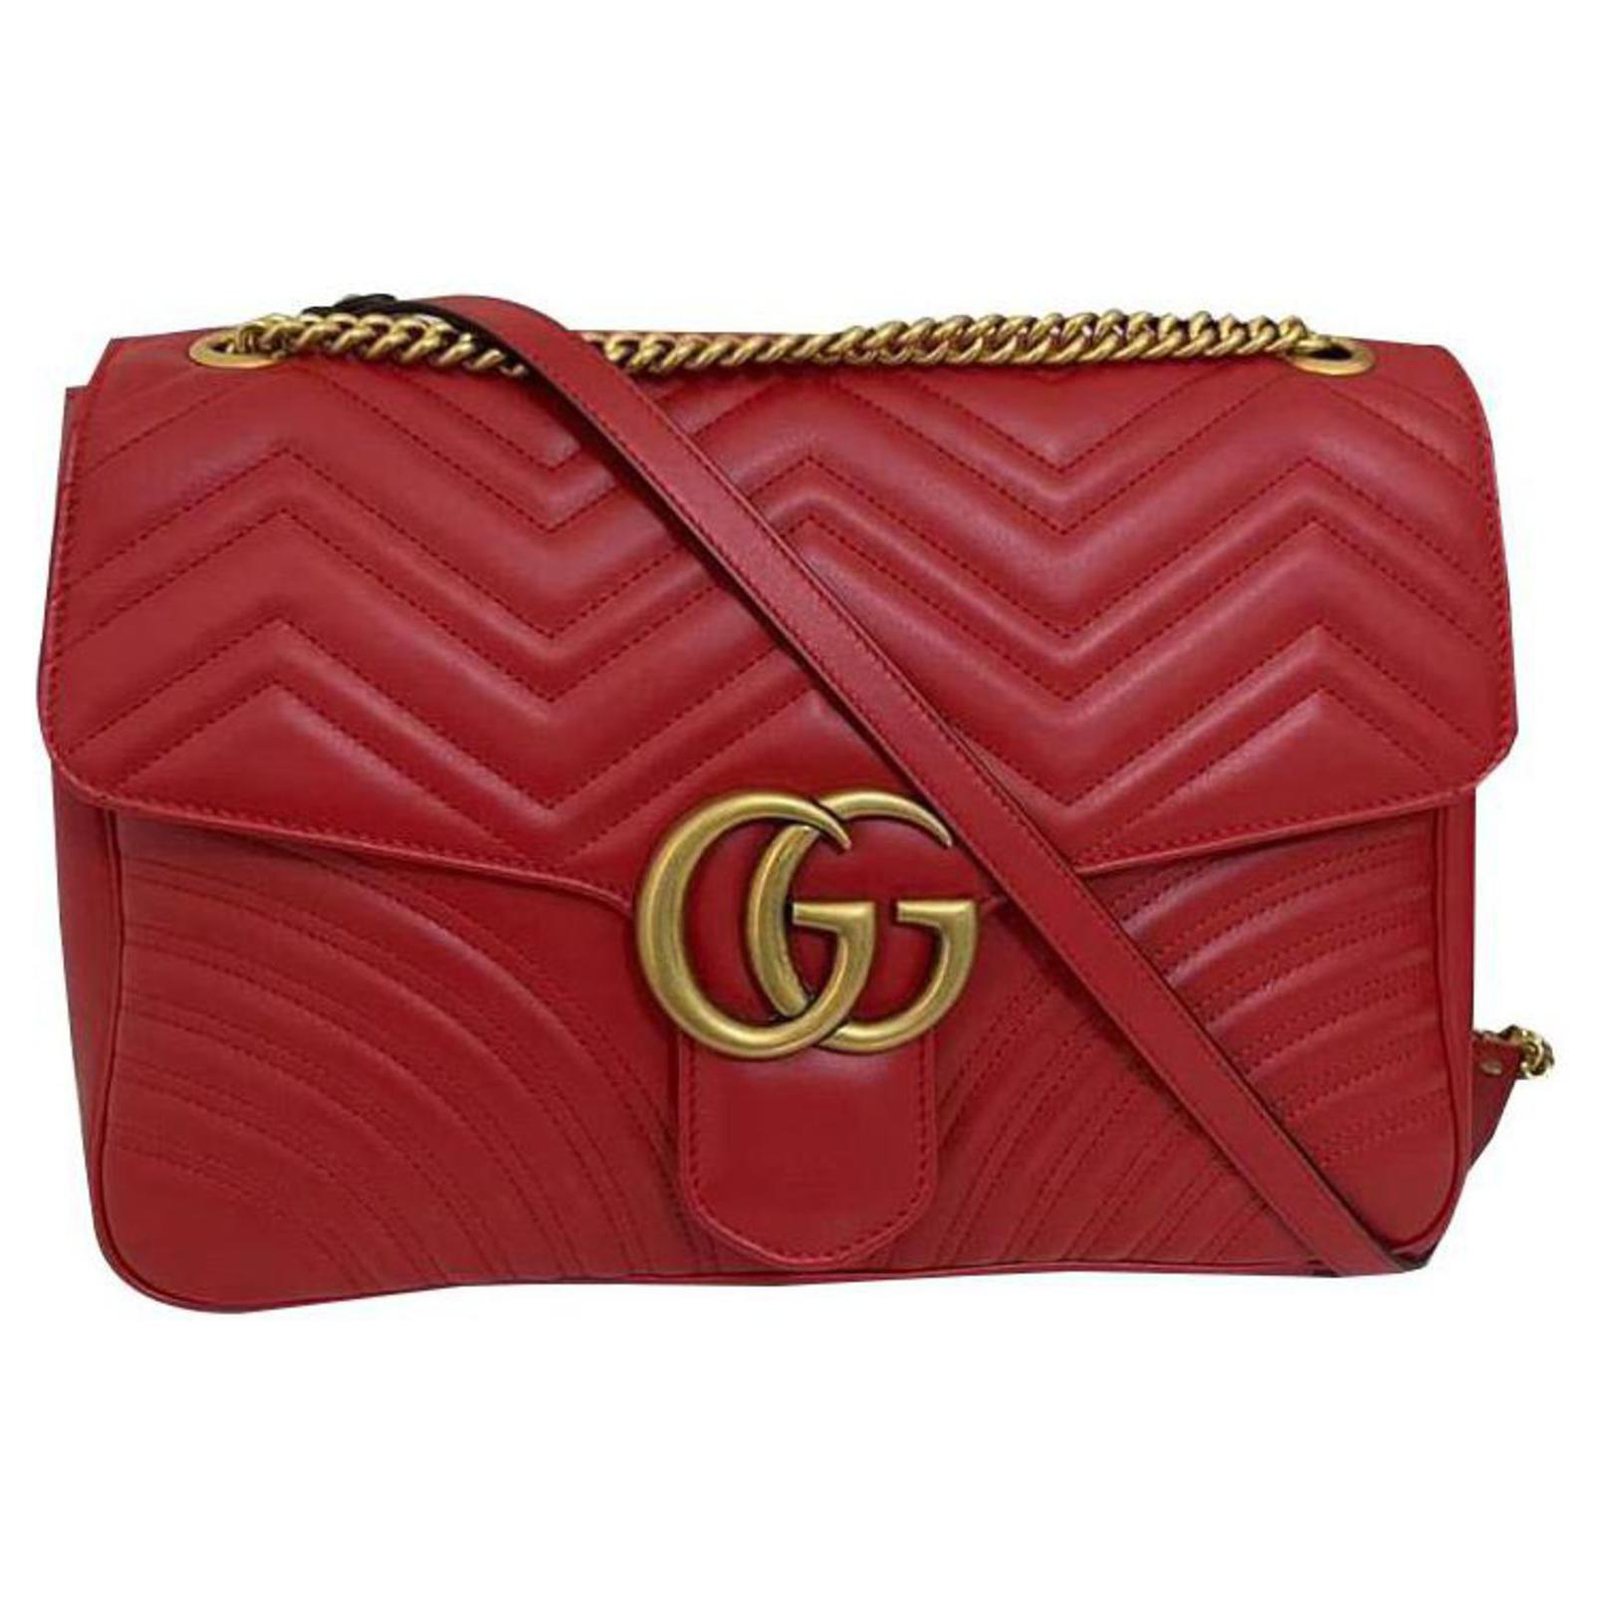 gucci handbag large